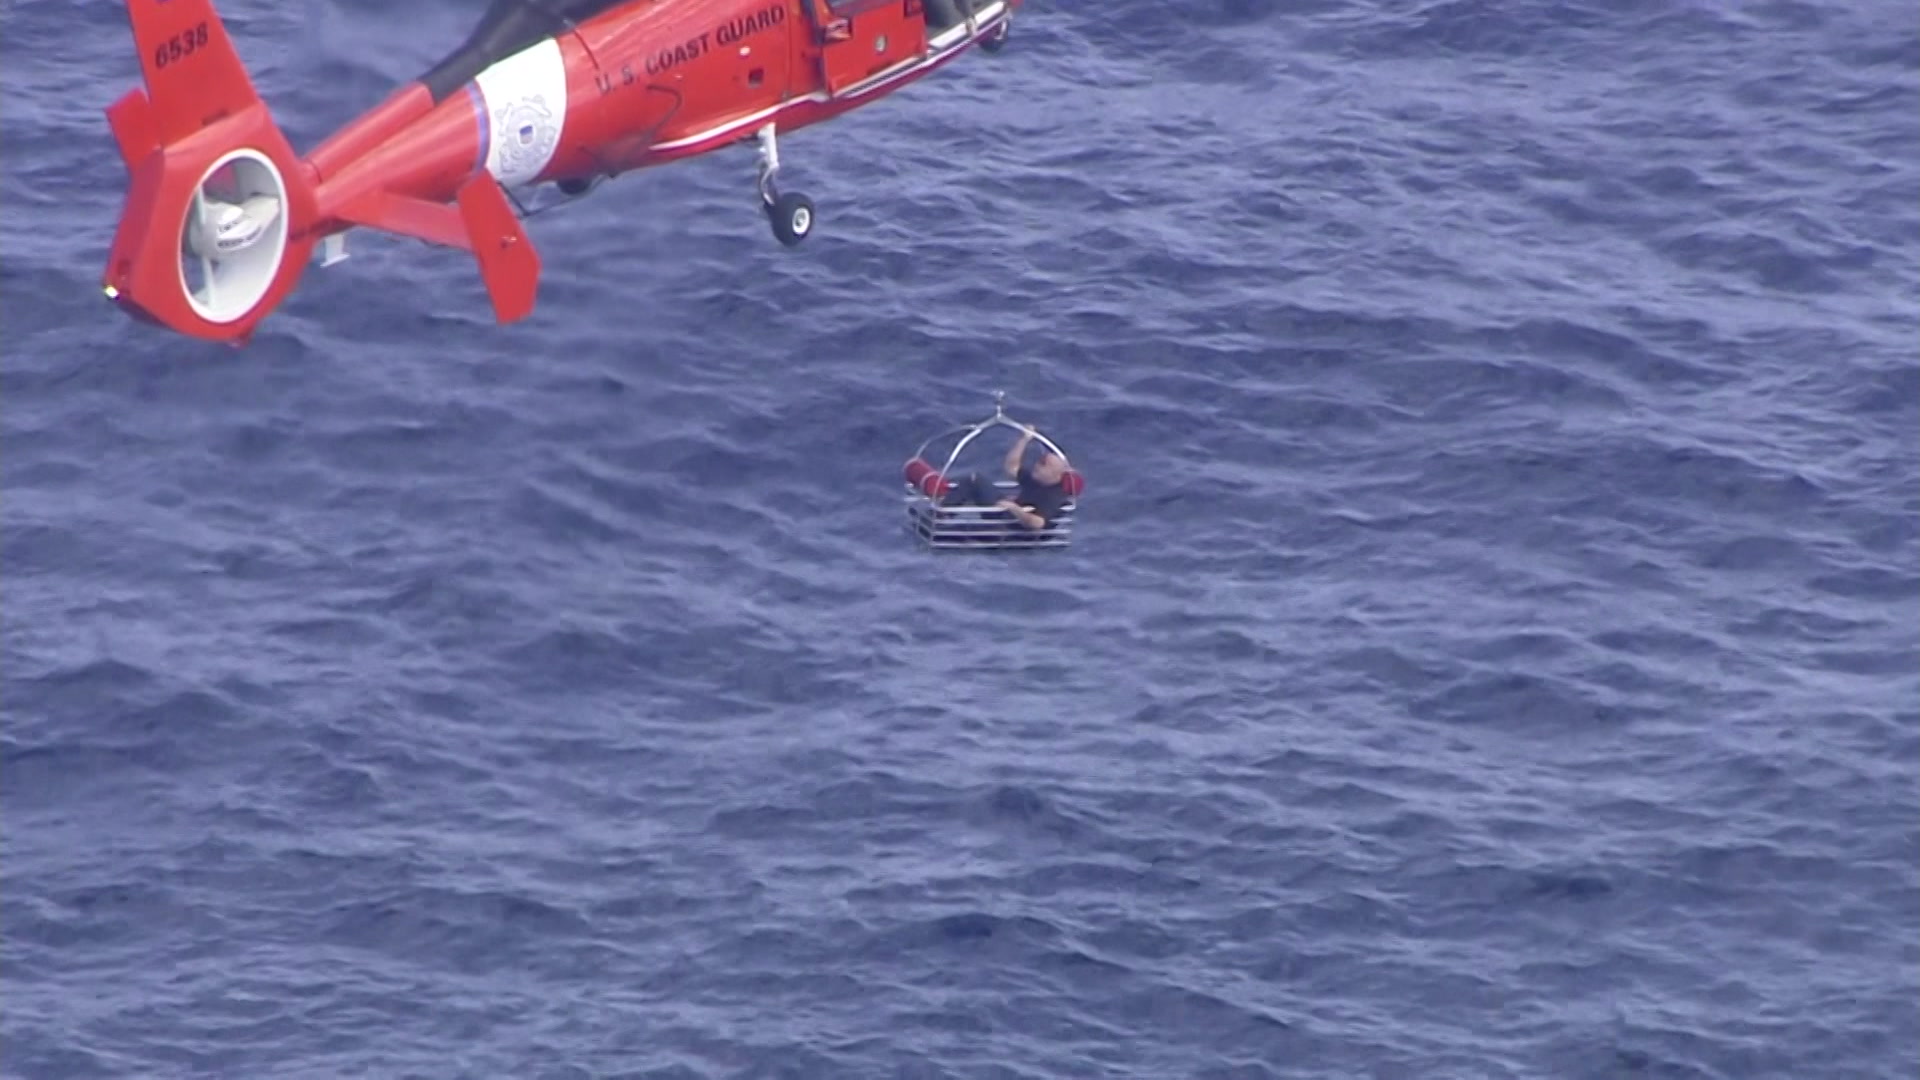 Resultado de imagen para 2 rescued after cargo plane that left South Florida crashes near Bahamas